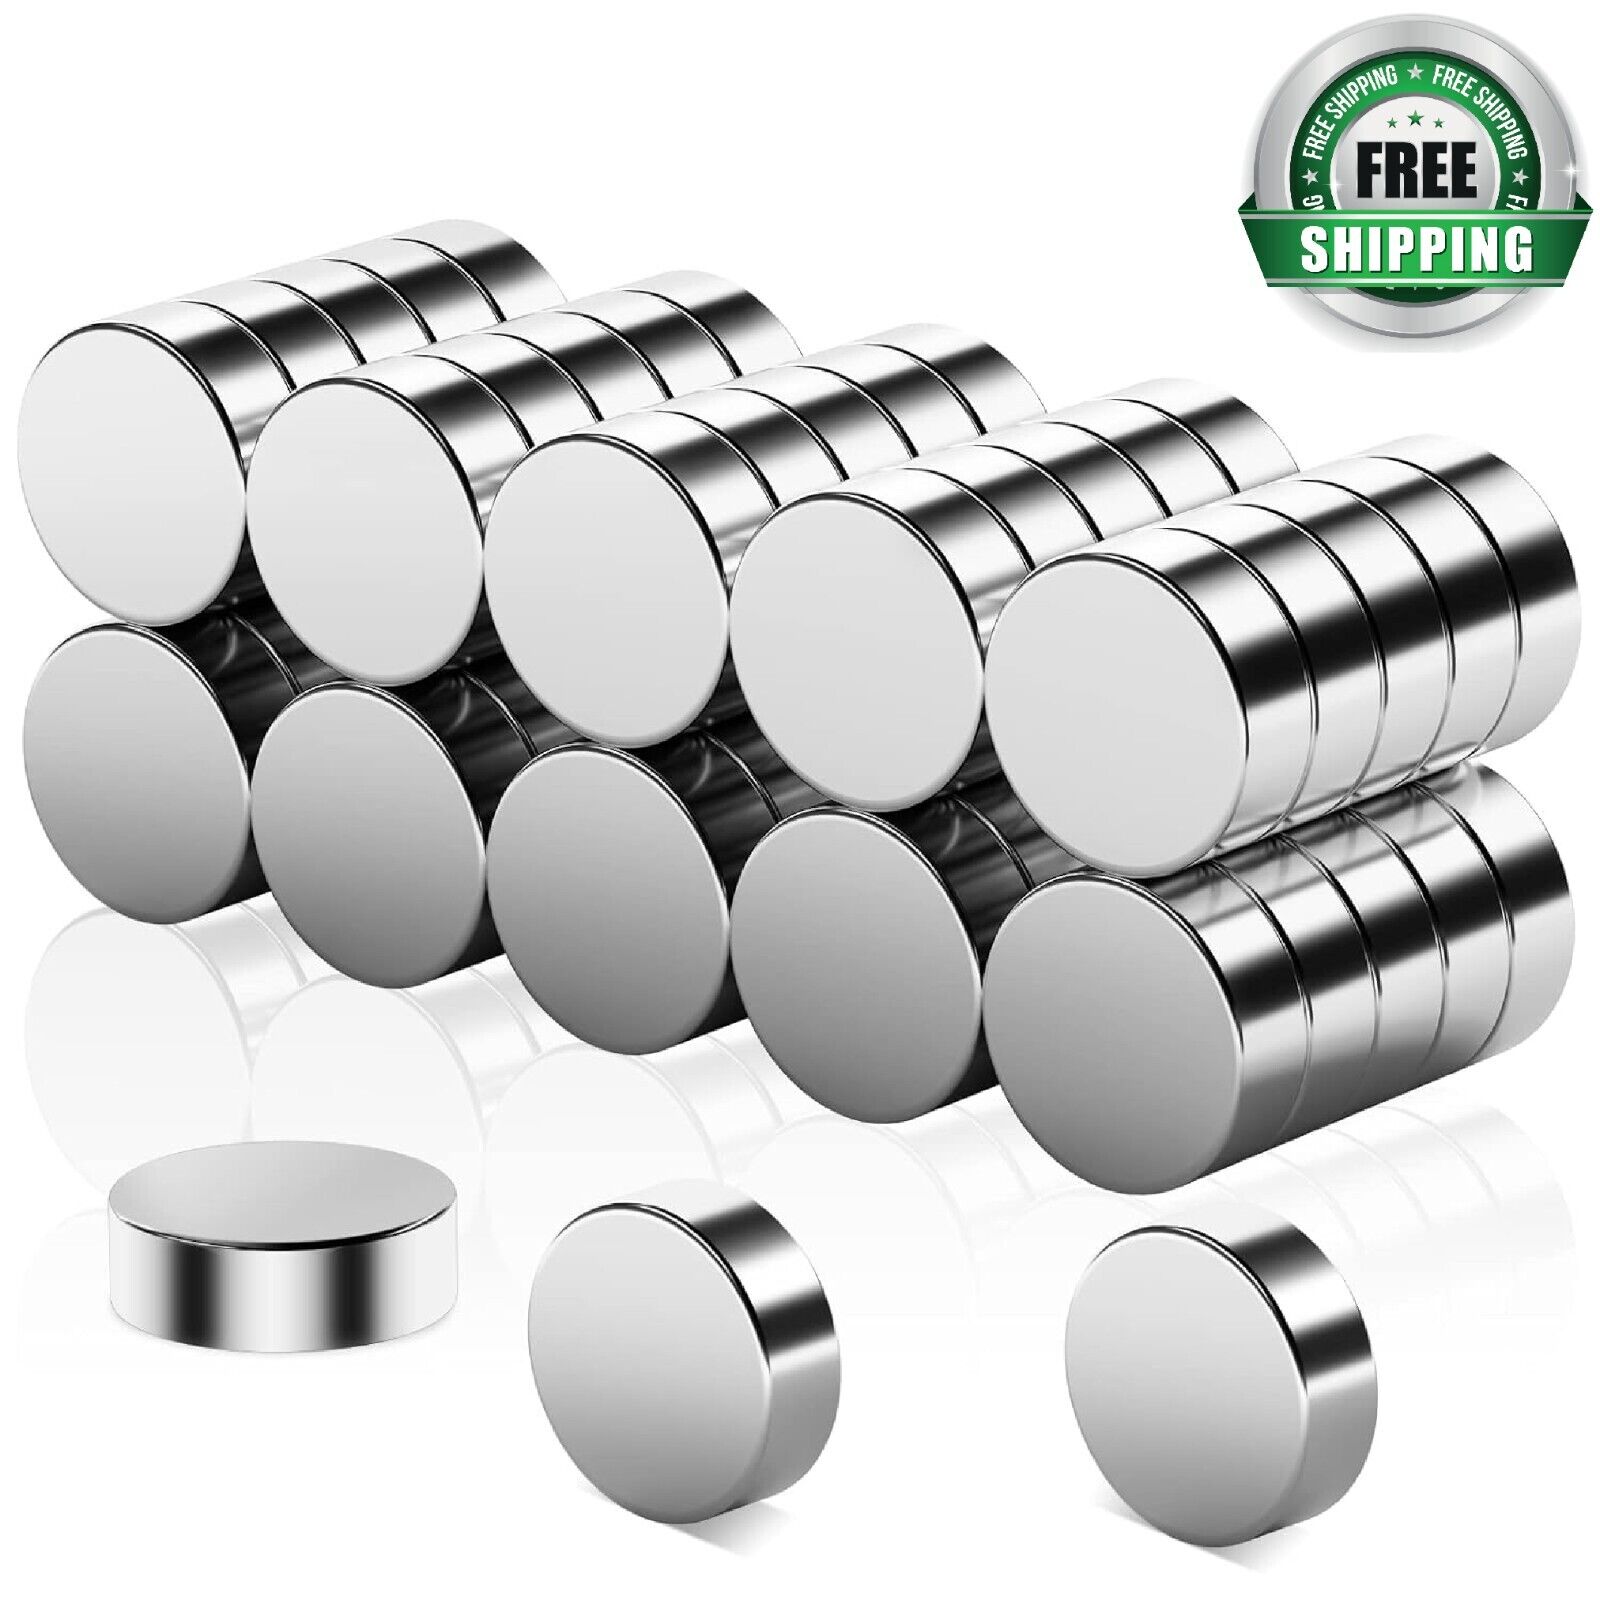 50 Pcs Fridge Magnets 6x2mm Refrigerator Magnets Magnets for Fridge & Crafts NEW